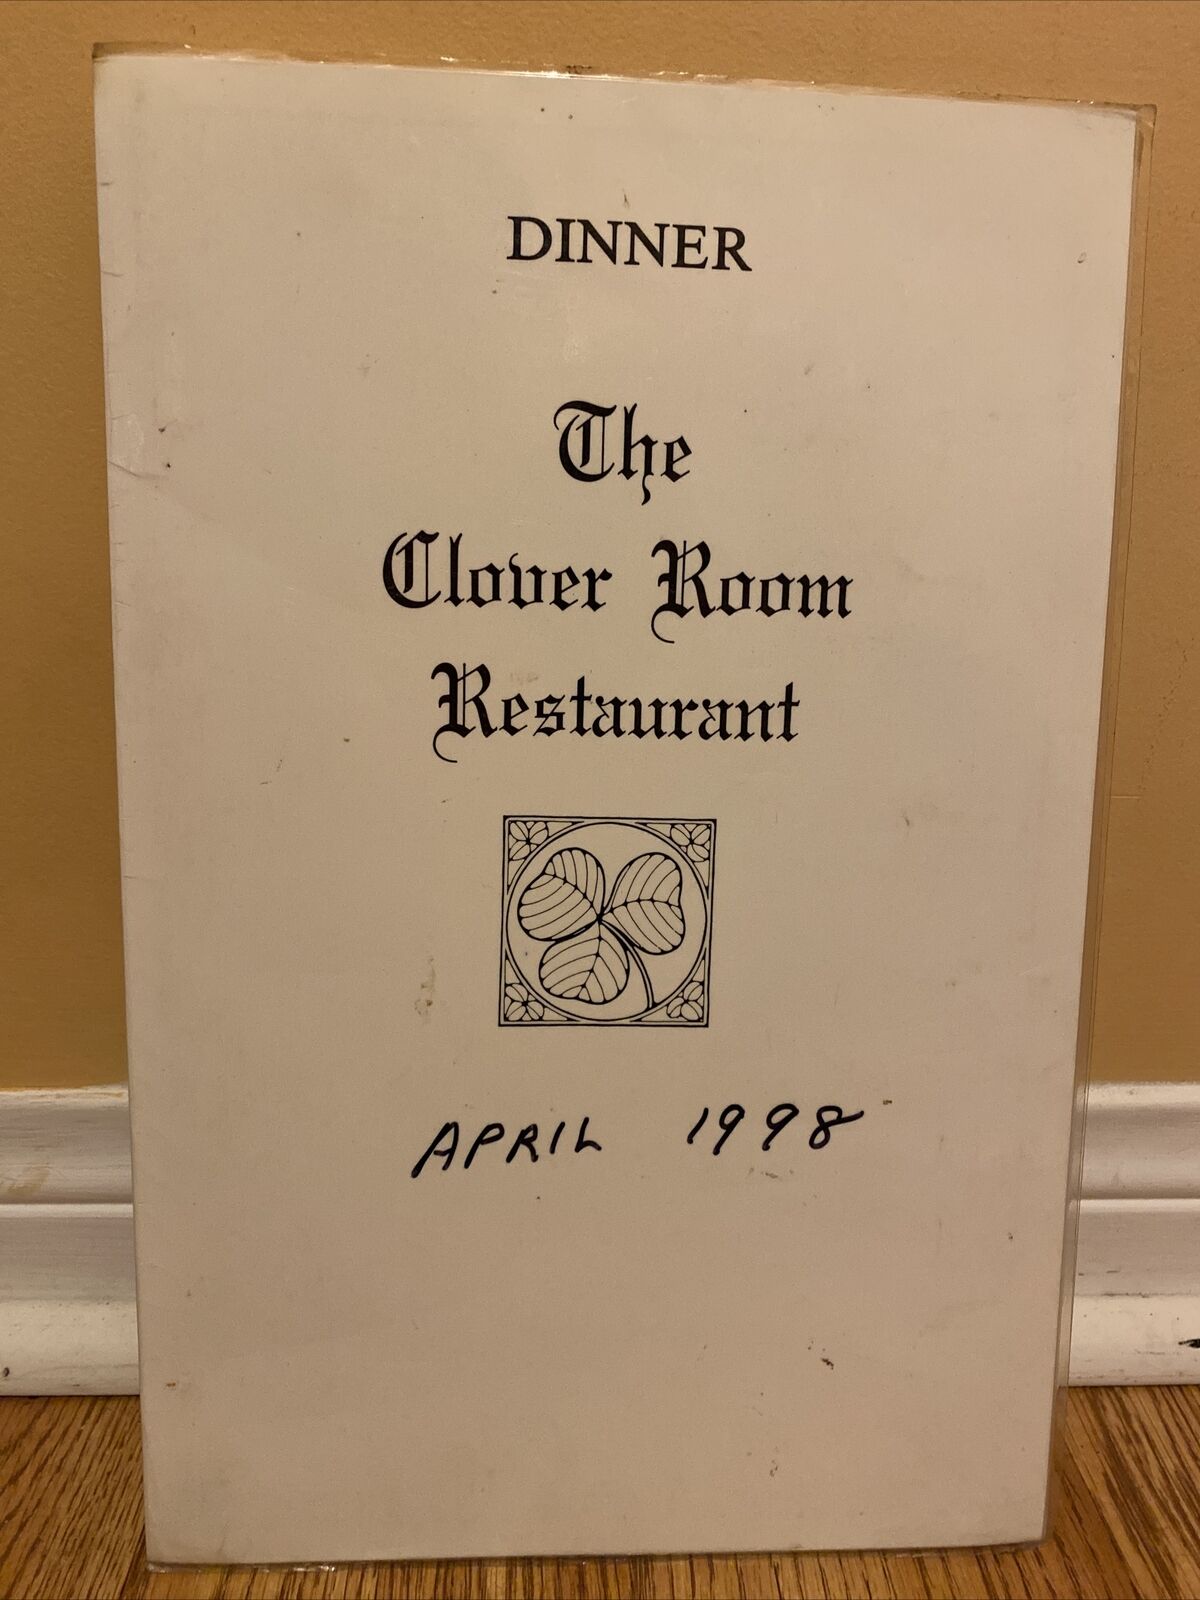 VINTAGE RESTARAUNT MENU 1998- “ The Clover Room Restaurant”